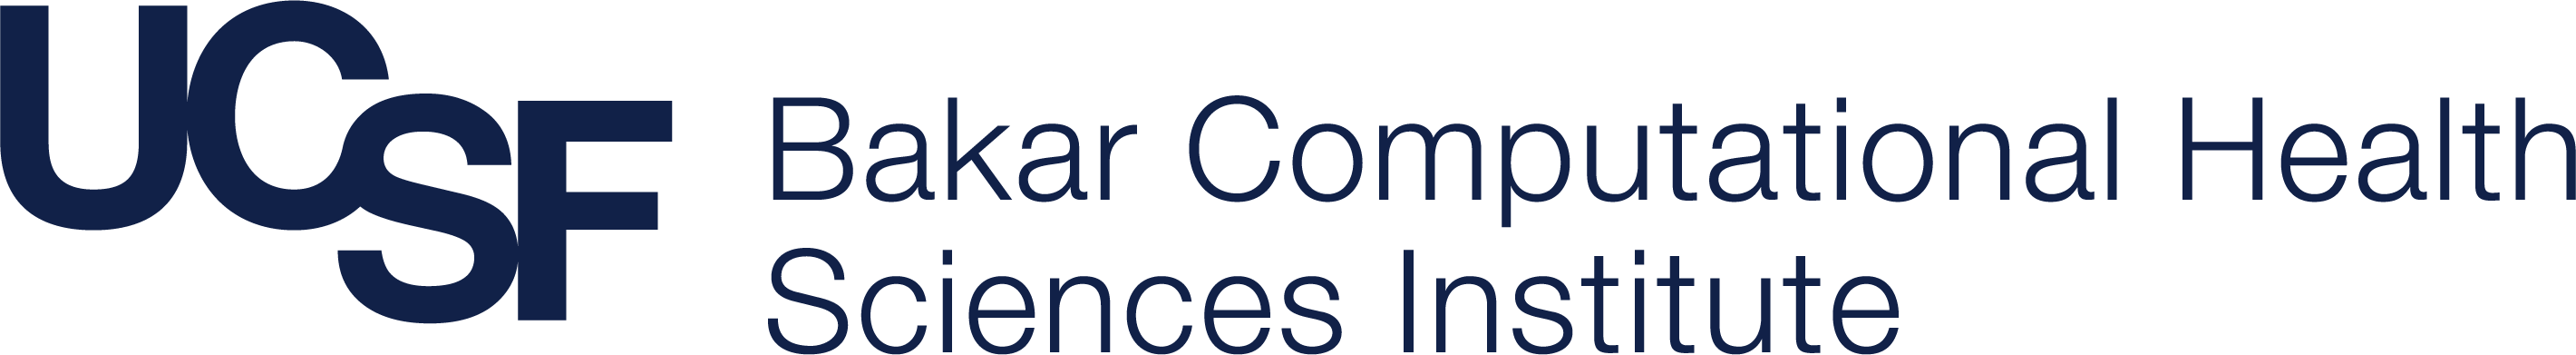 Bakar Computational Health Sciences Institute (BCHSI) logo